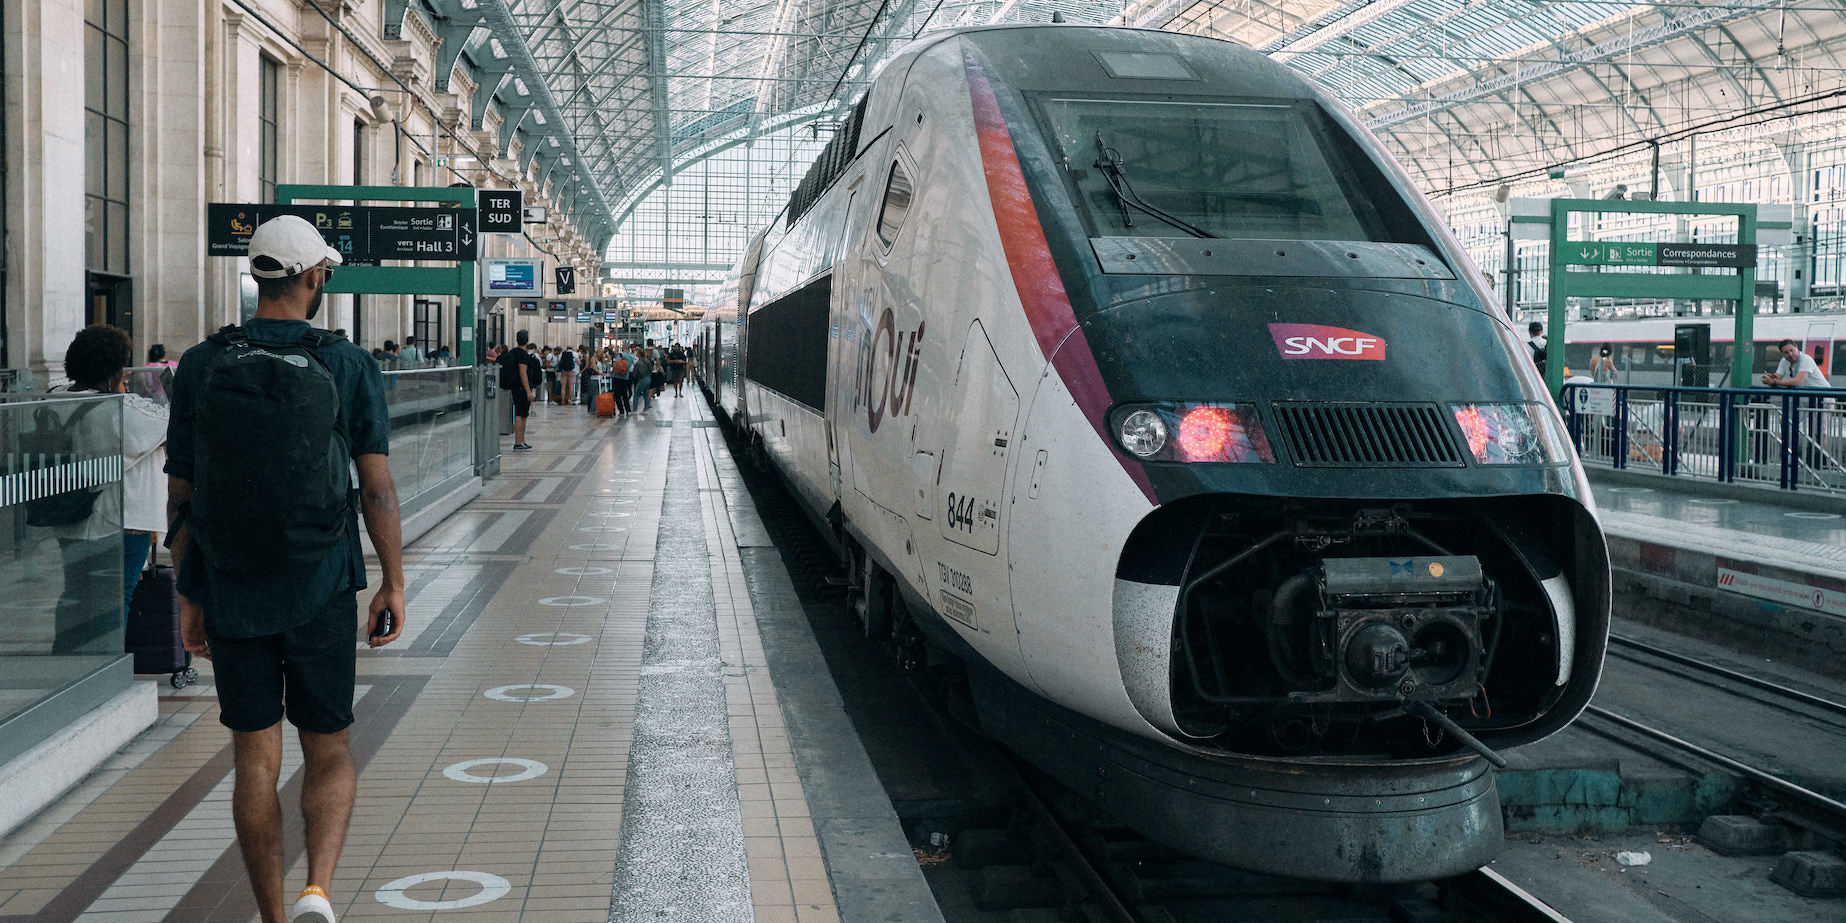 TRAIN ELECTRIQUE TGV - وهران الجزائر